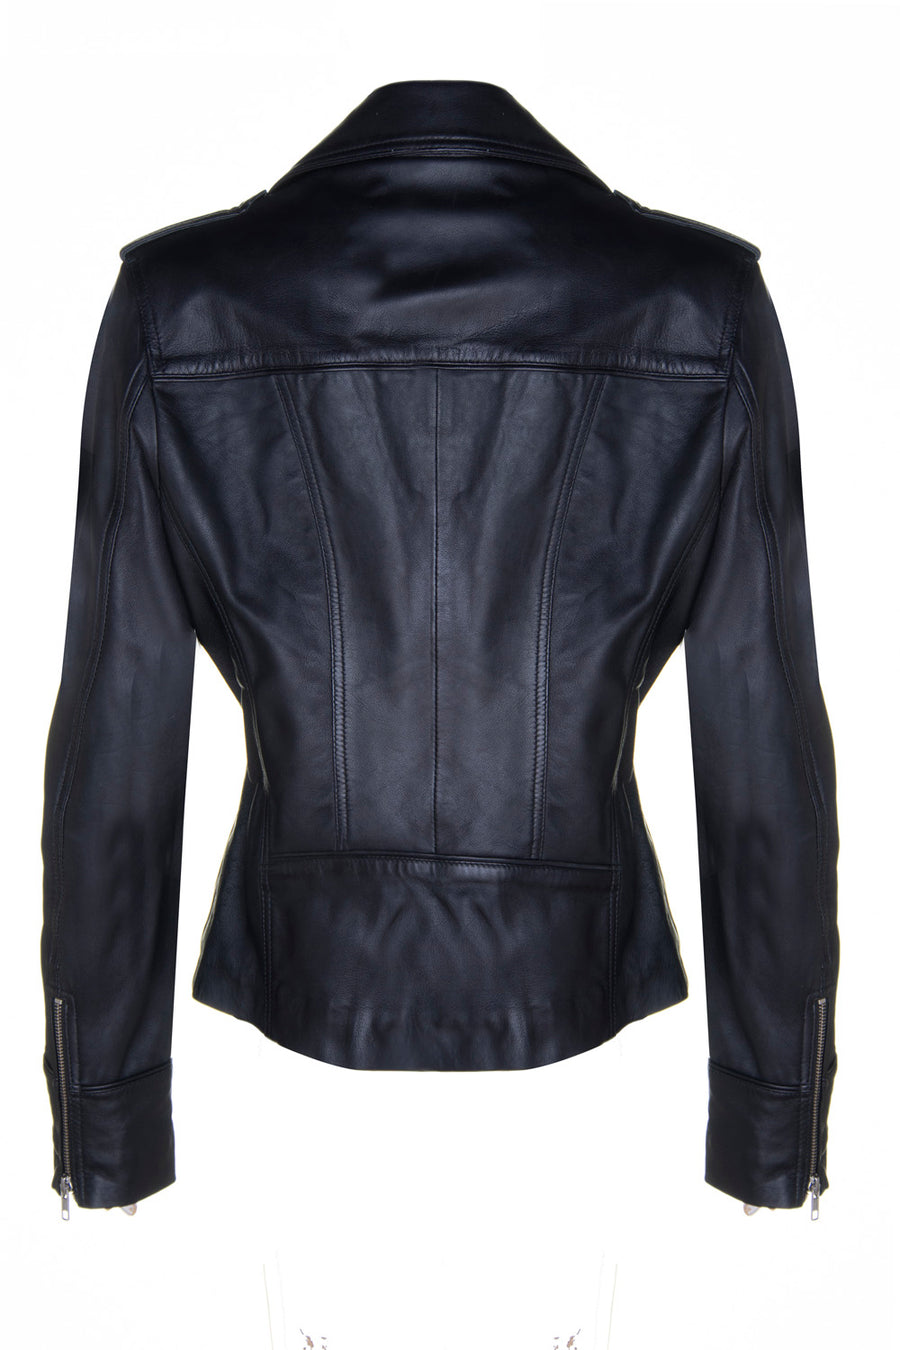 9823 Biker Trend Ladies Leather Jacket